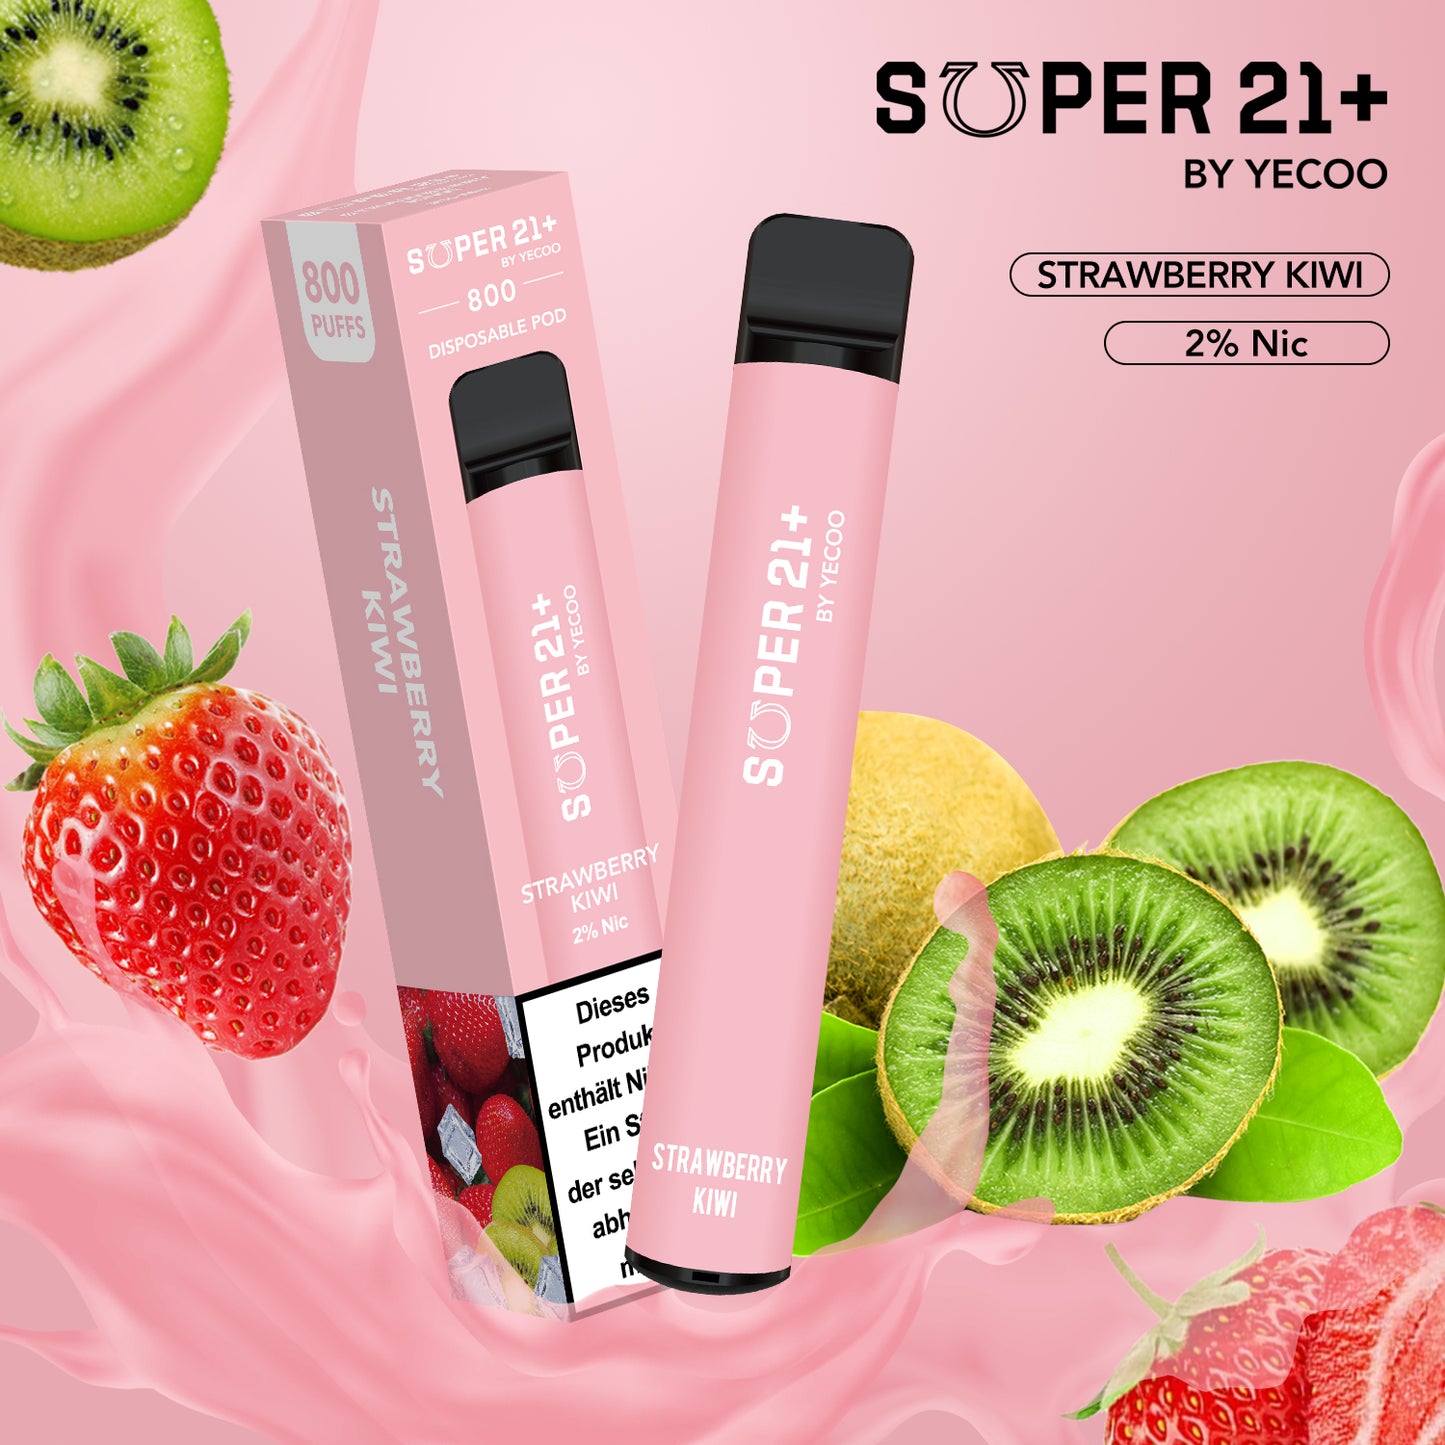 Super21+ 800 Strawberry Kiwi (2% Nic)